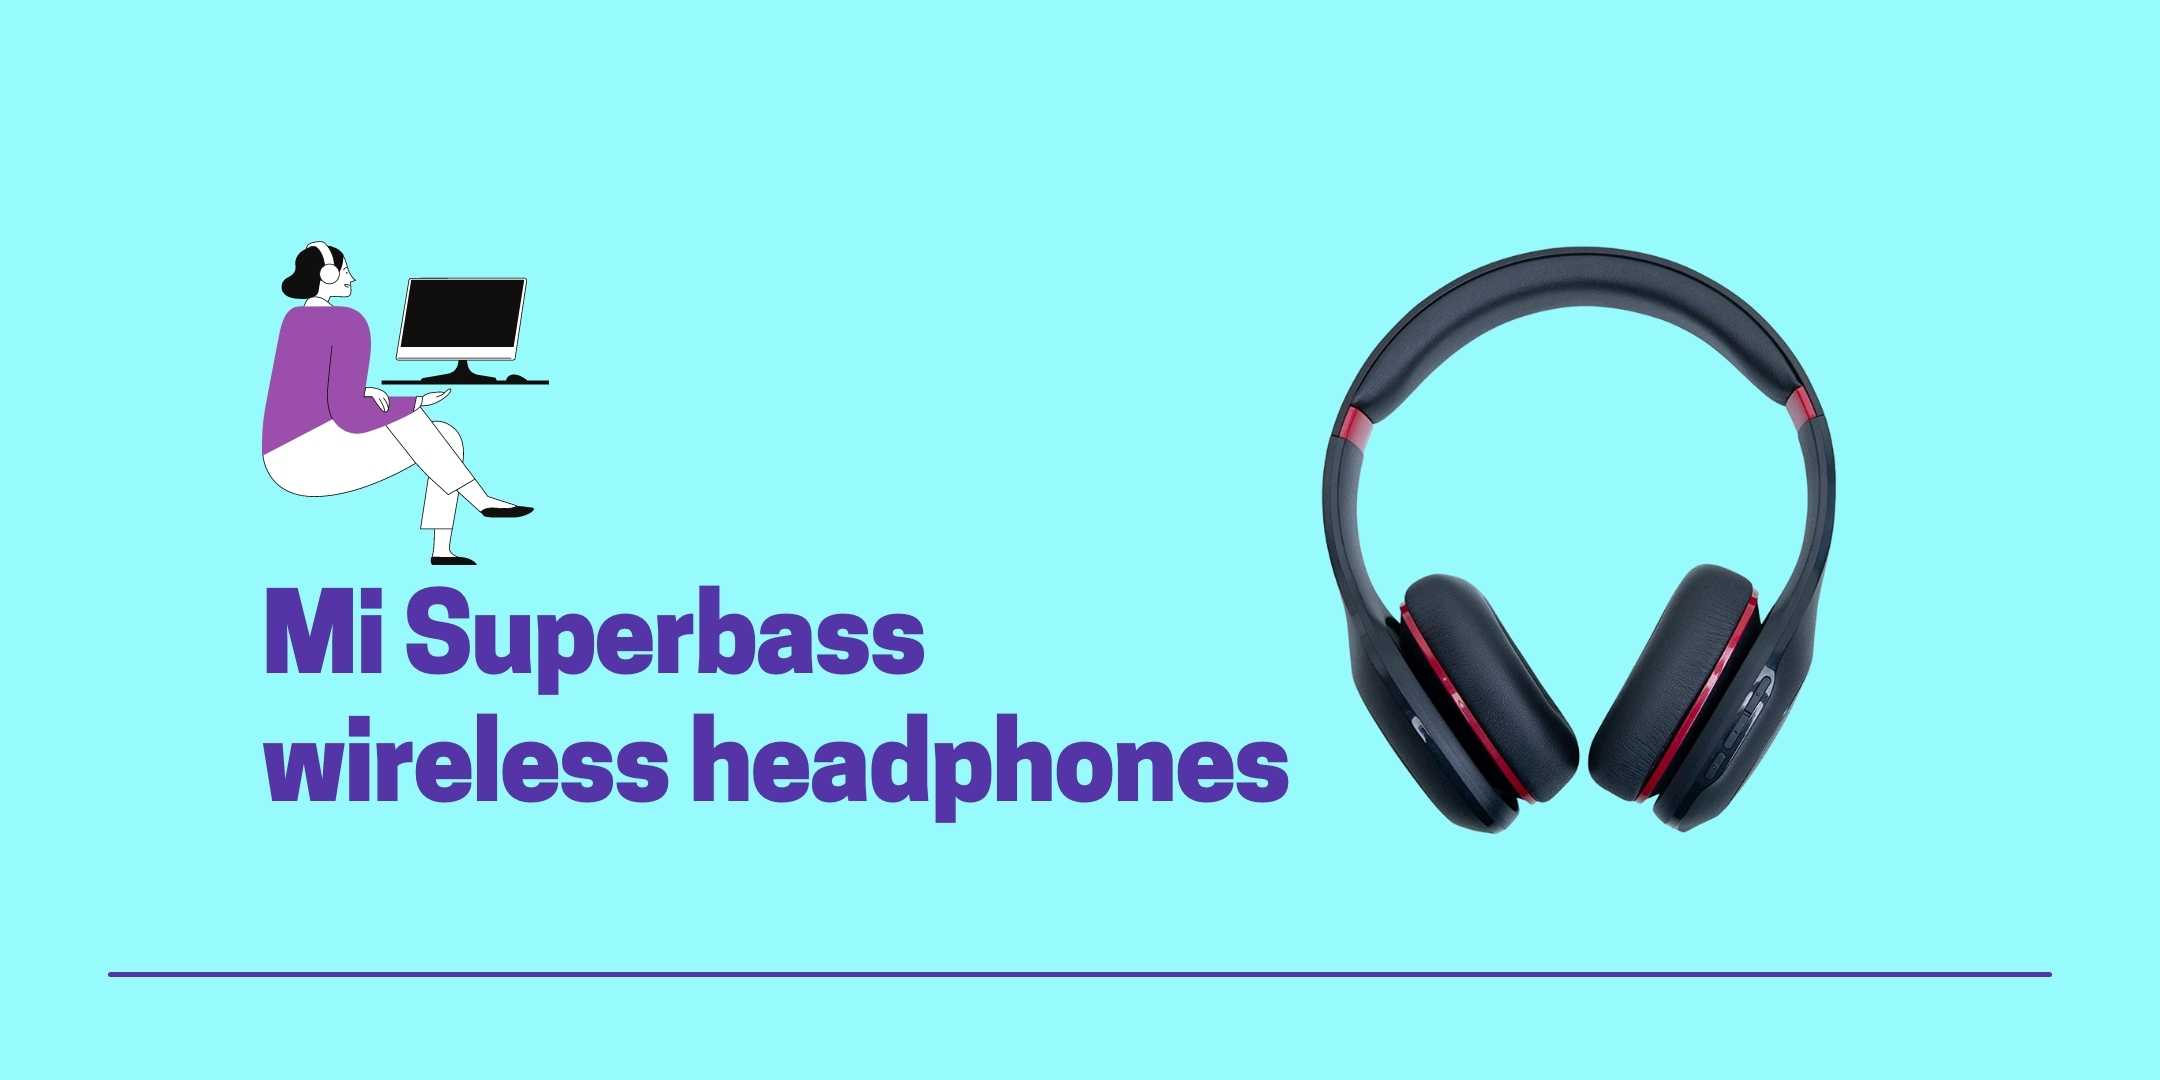 Mi Superbass wireless headphones